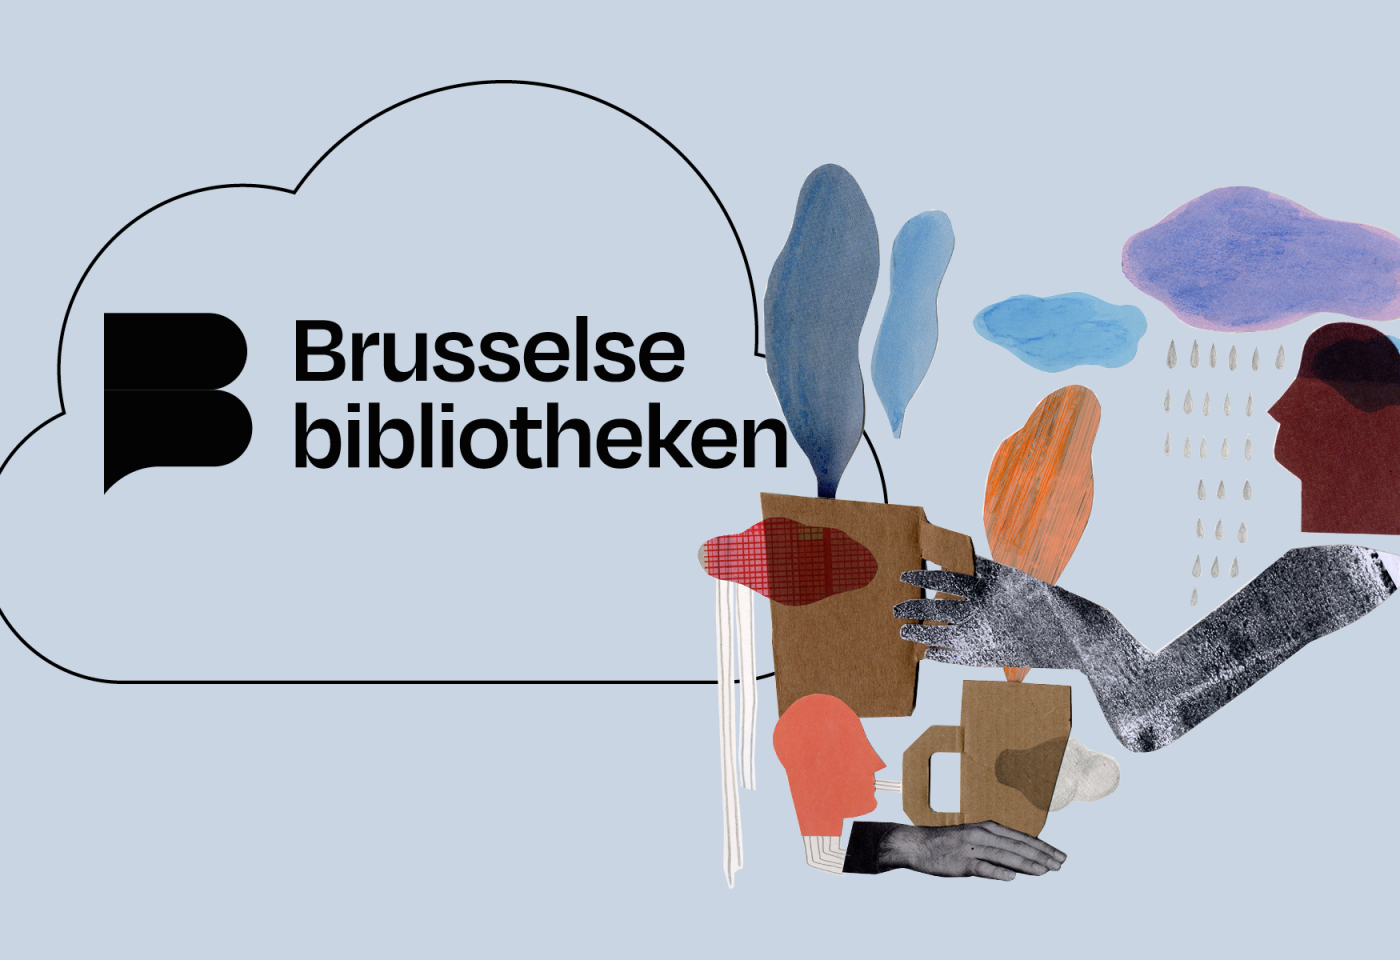 Brusselse bibliotheken digitaal aanbod